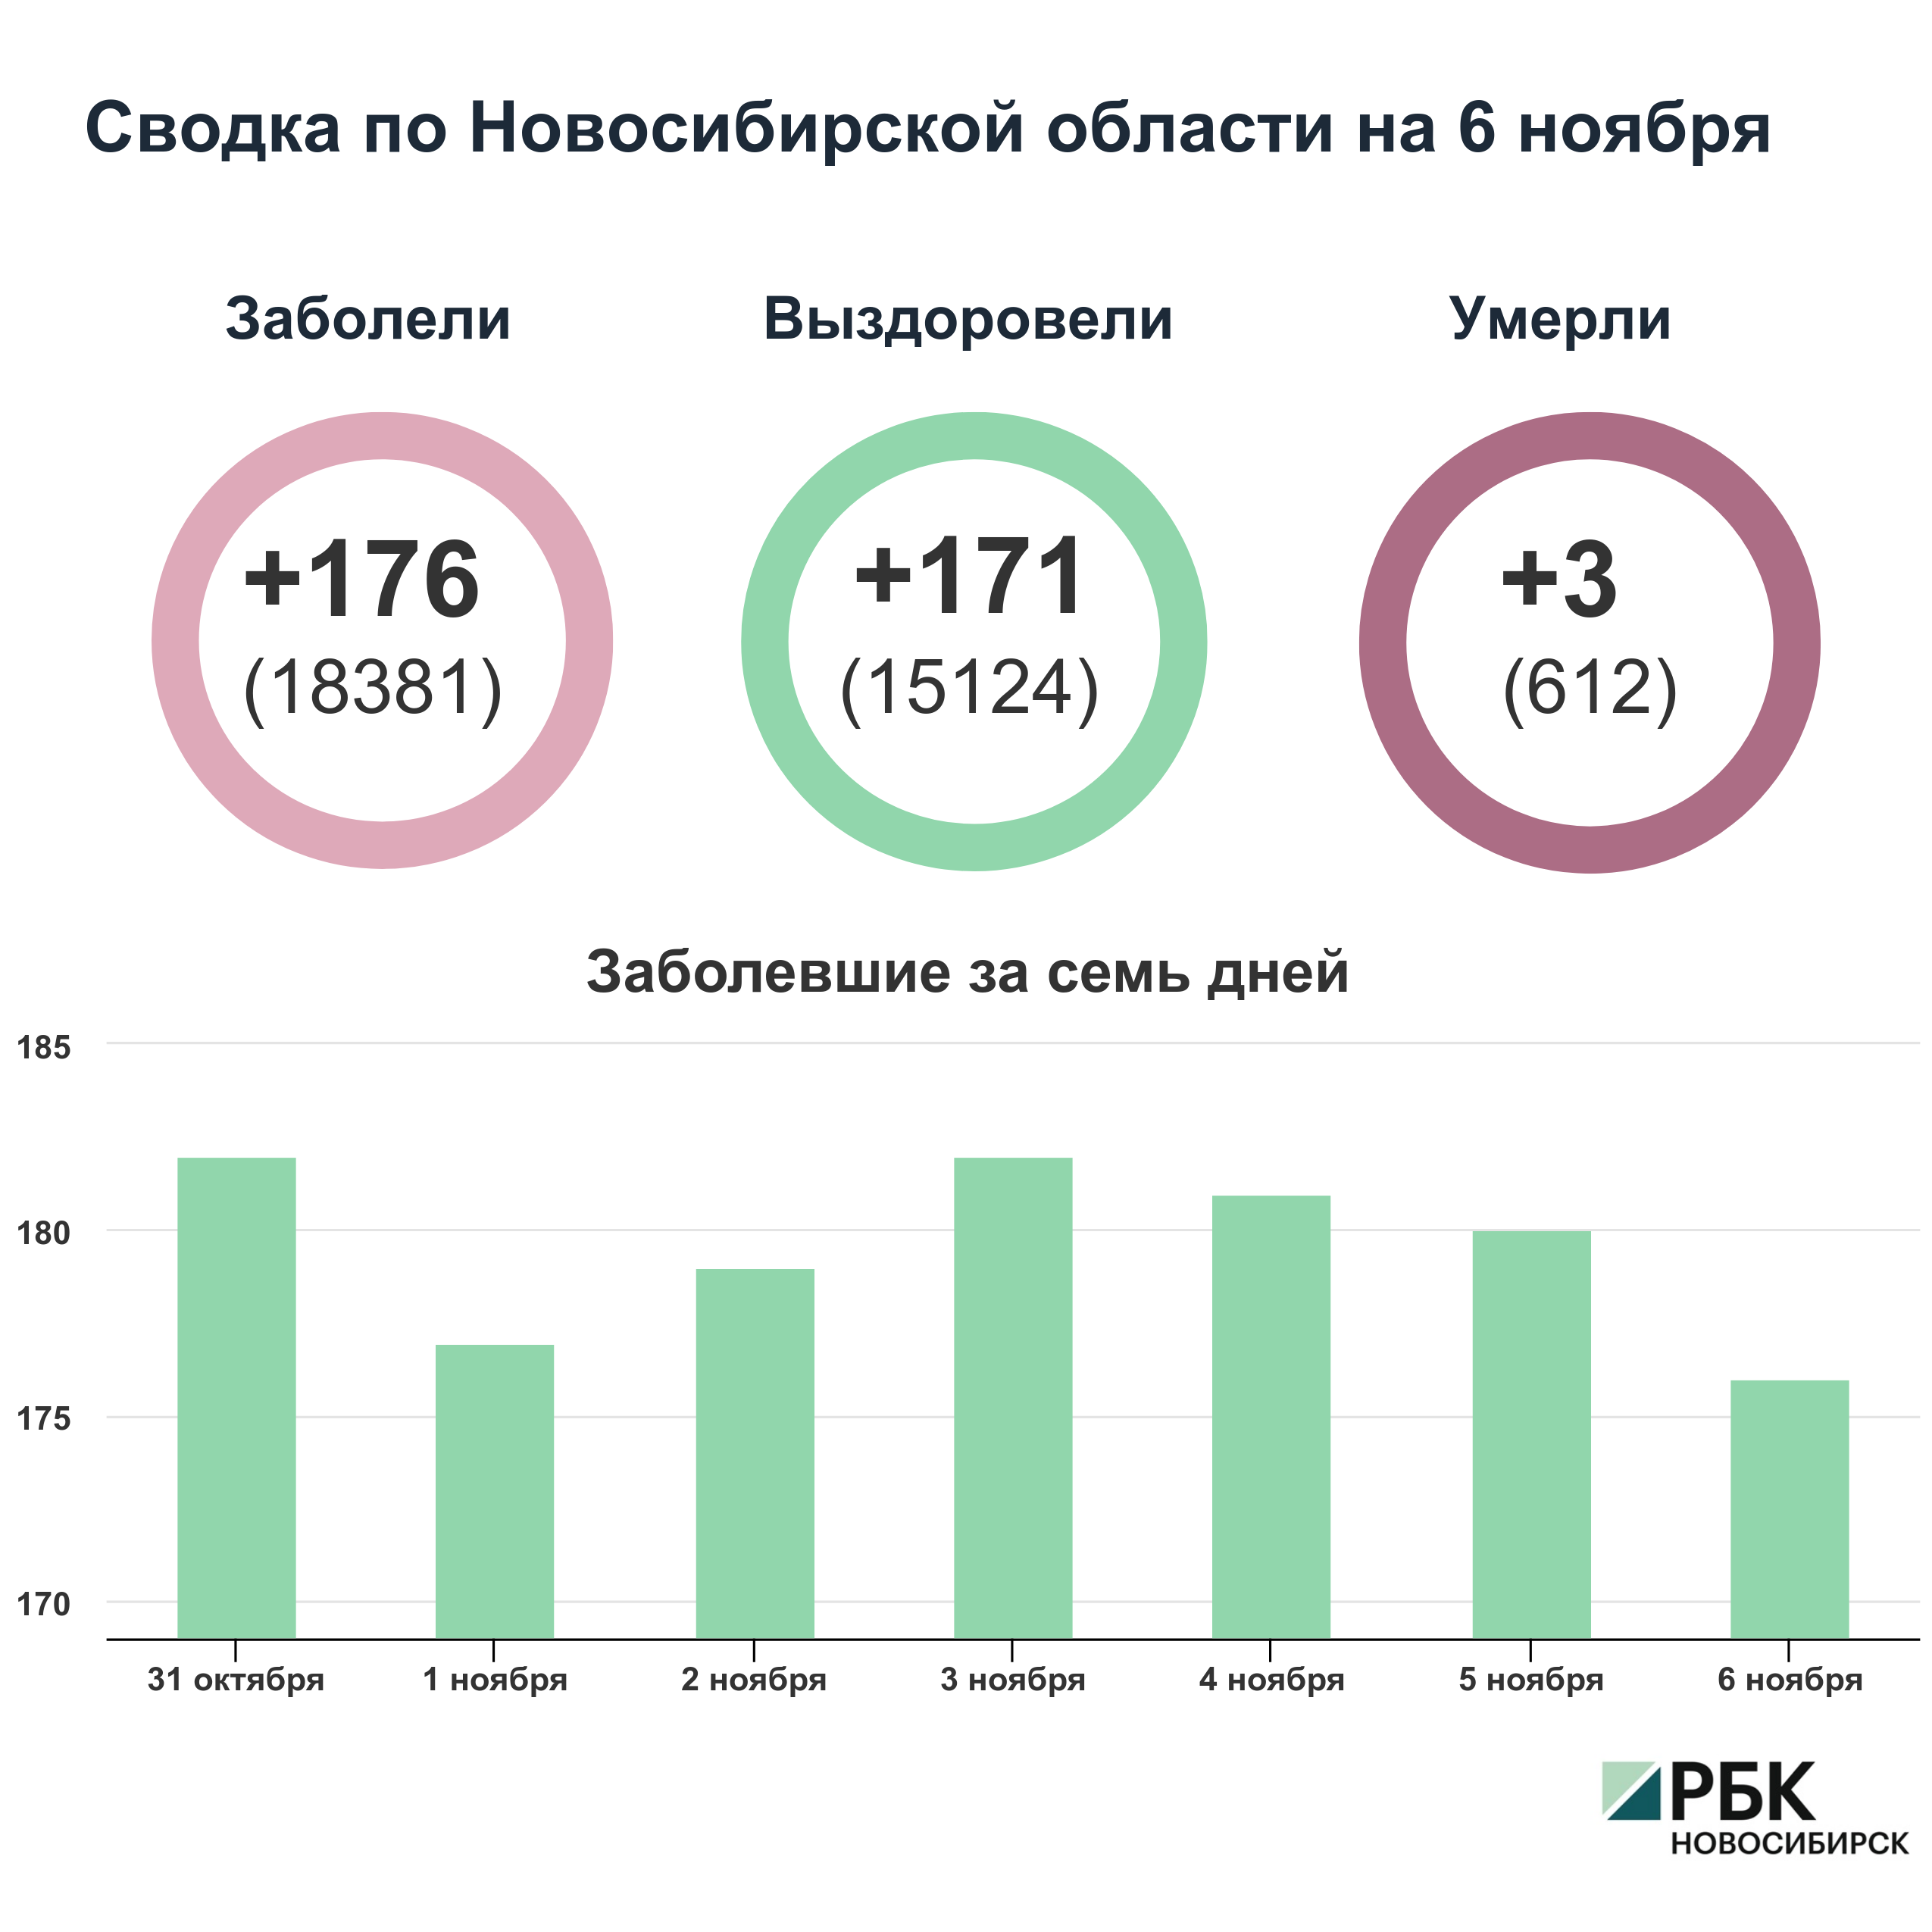 Коронавирус в Новосибирске: сводка на 6 ноября